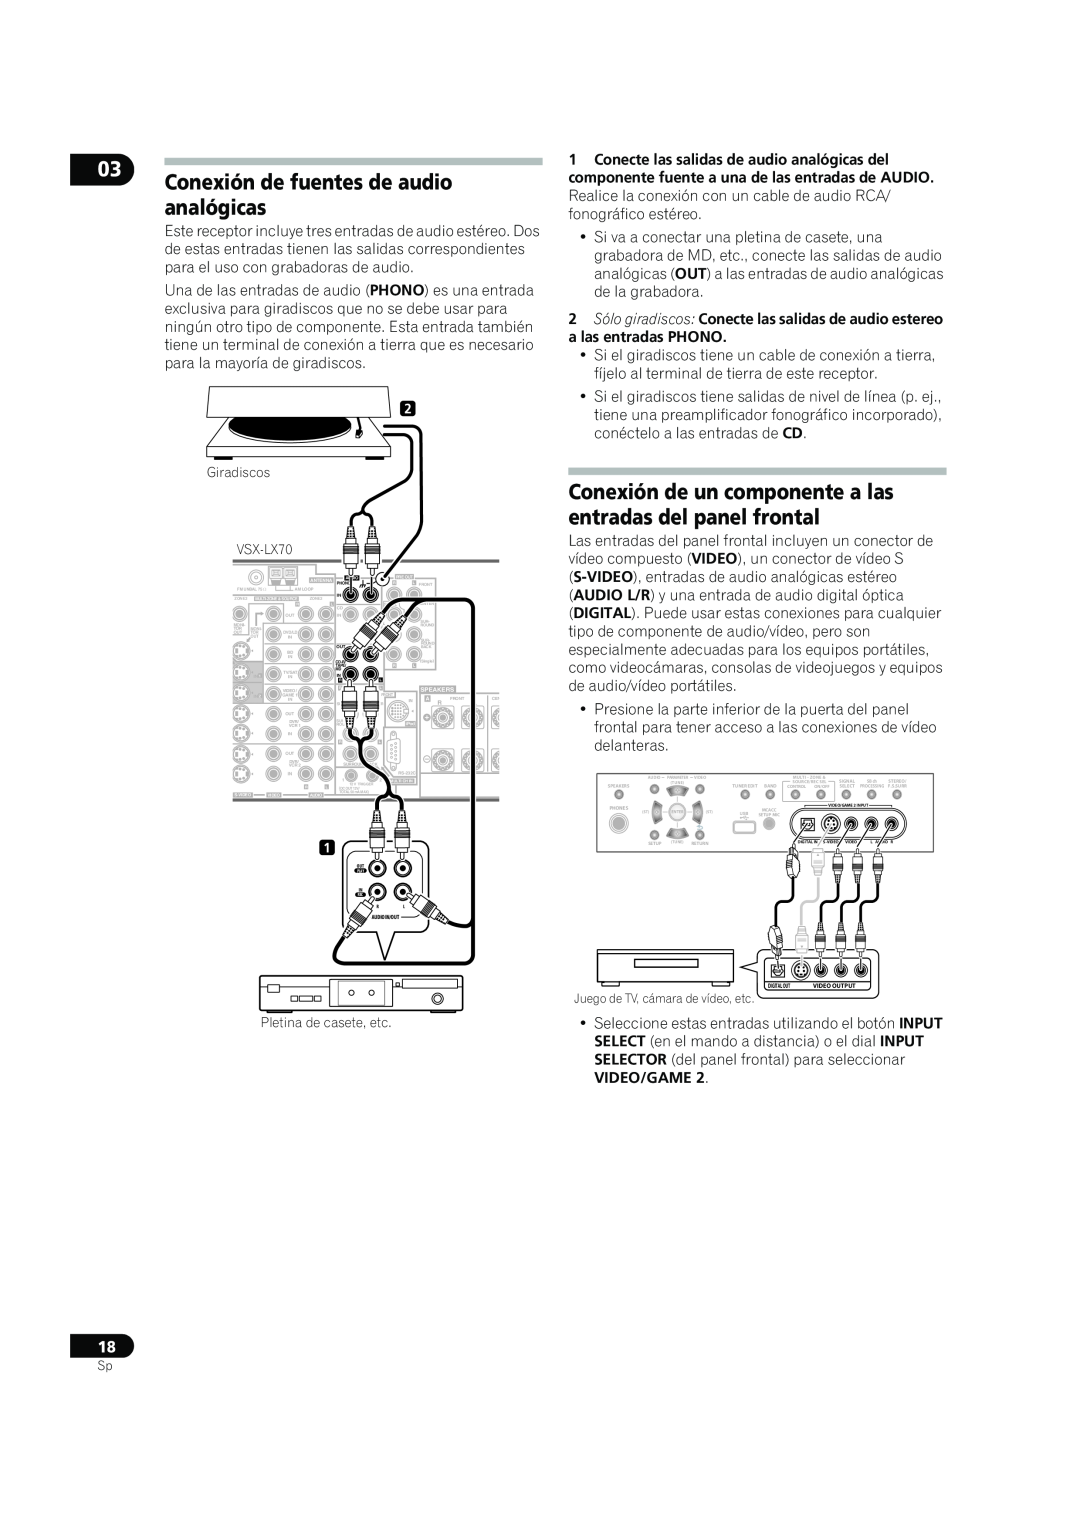 Bernina VSX-LX60 manual Conexión de fuentes de audio analógicas, SELECT en el mando a distancia o el dial INPUT, Video/Game 